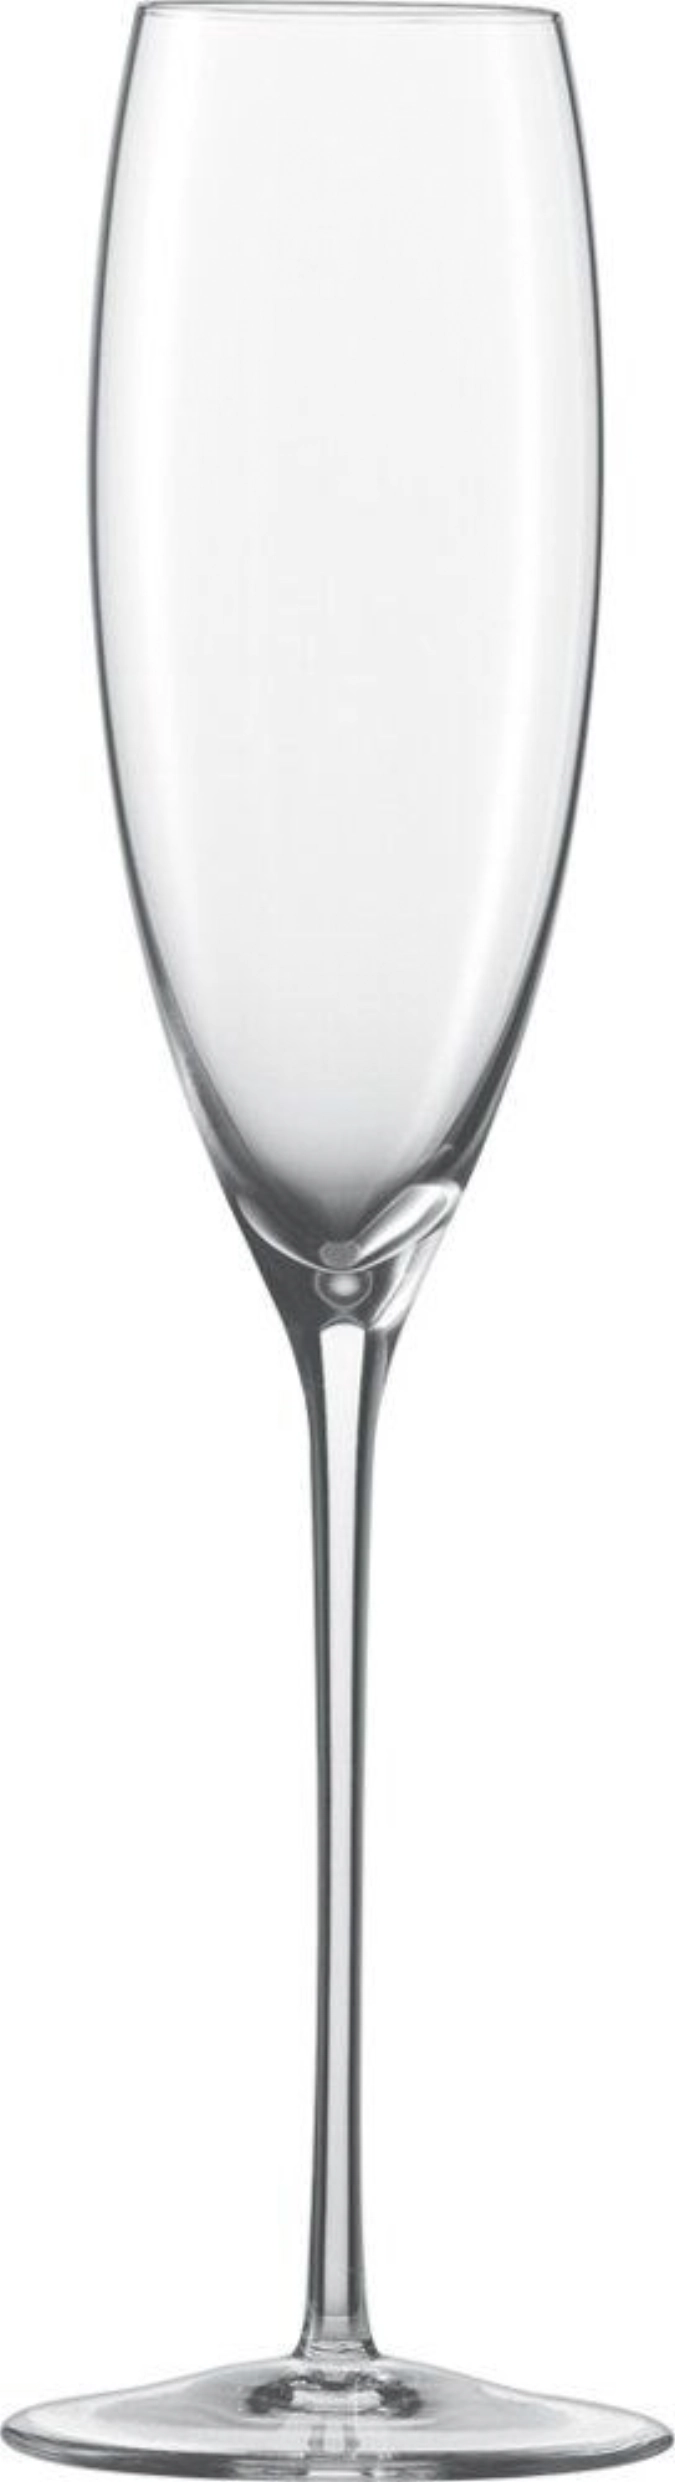 Enoteca 7 coupe à champagne 214ml